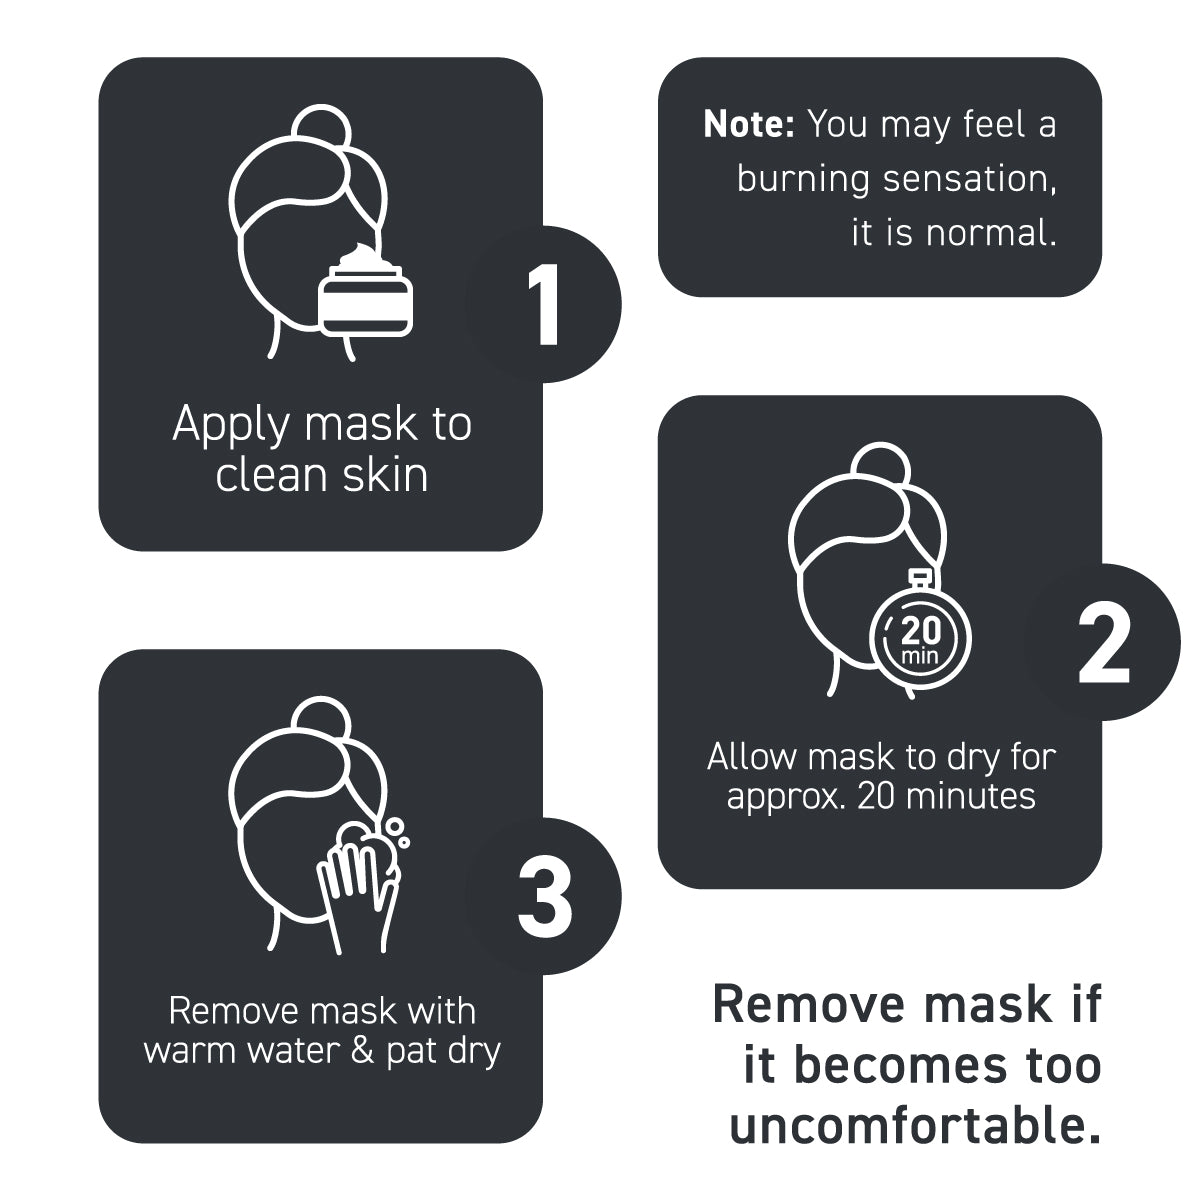 Bentonite Facial Mask 6 oz – Moisturizing and Hydrating Face Mask